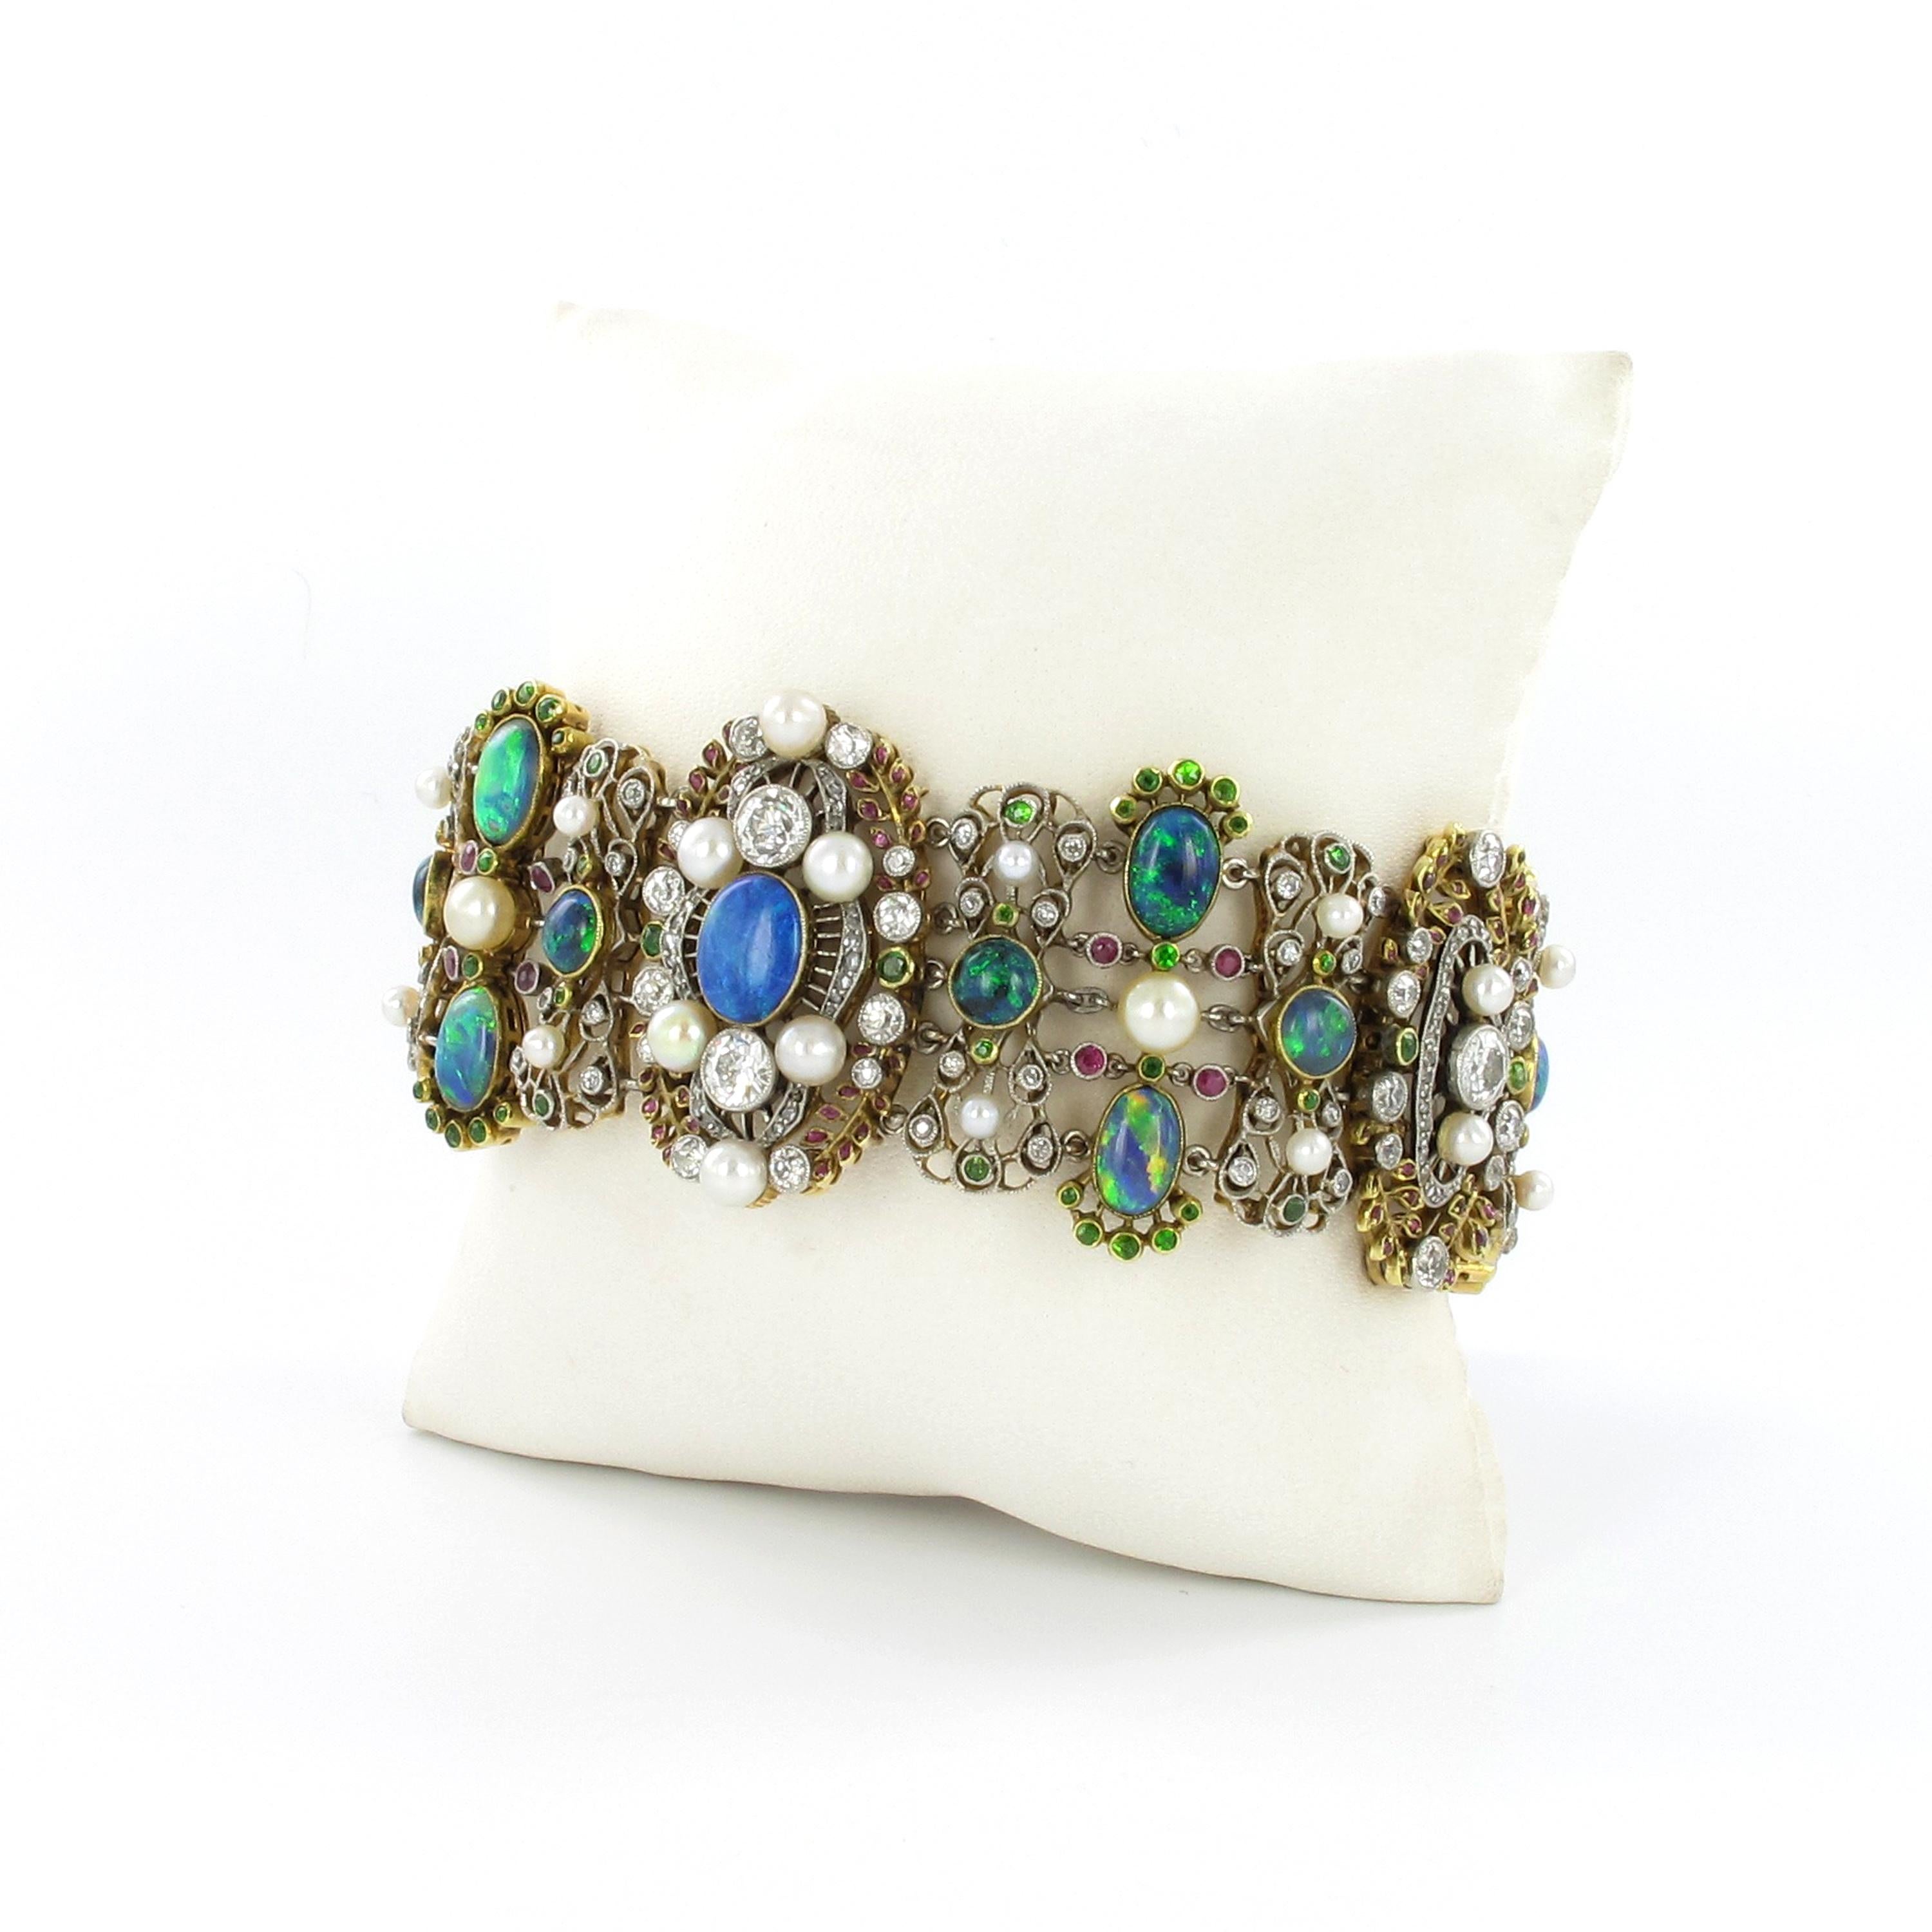 Old European Cut Belle Époque/Art Nouveau Bracelet with Opals, Pearls and Diamonds by Rothmuller For Sale